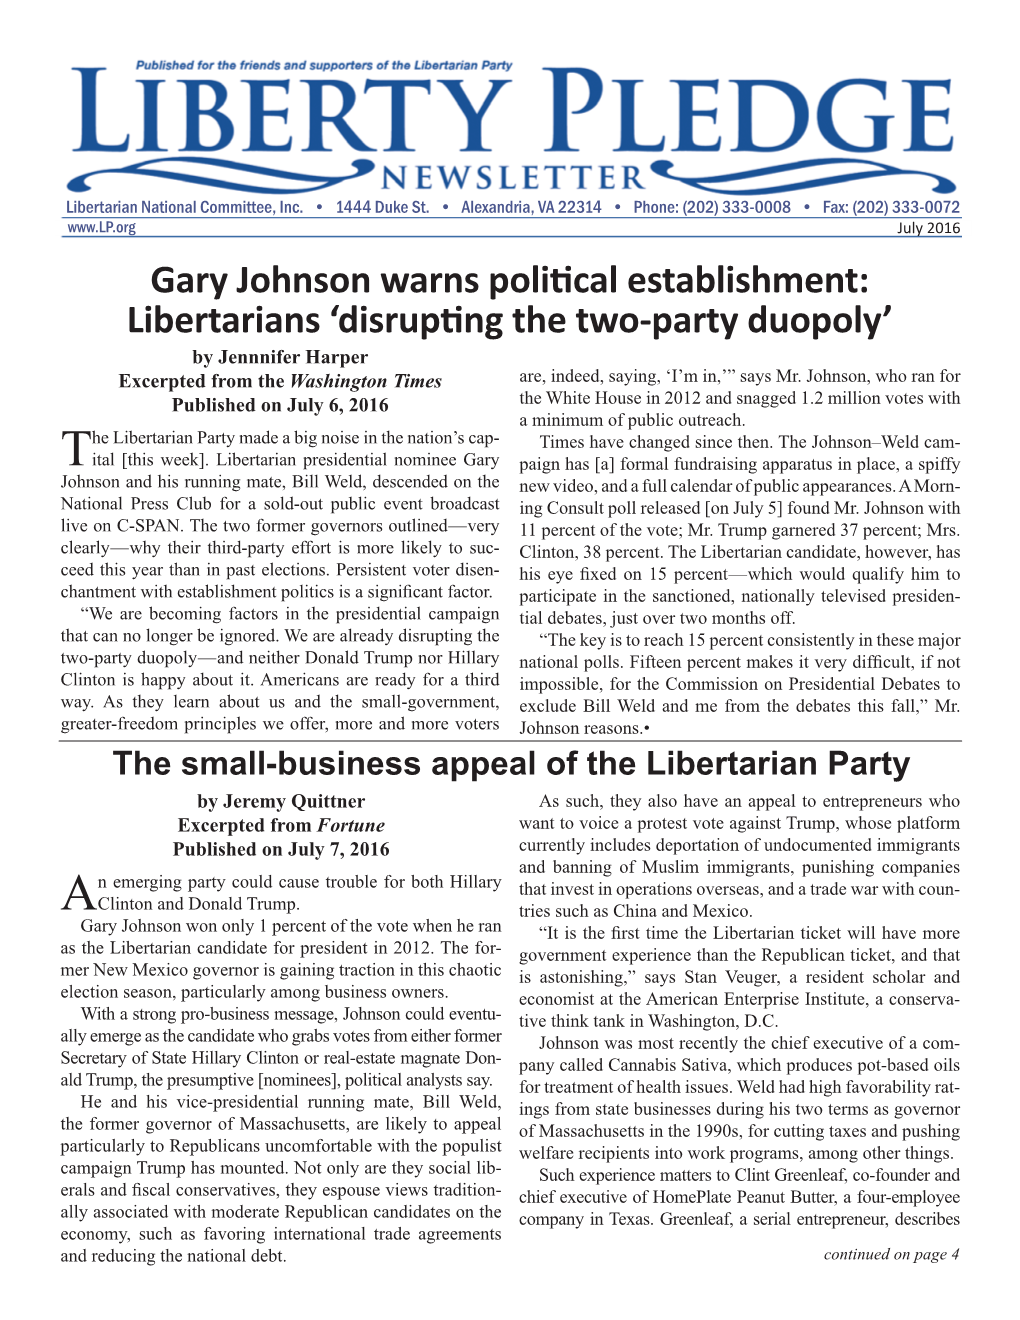 Gary Johnson Warns Political Establishment: Libertarians